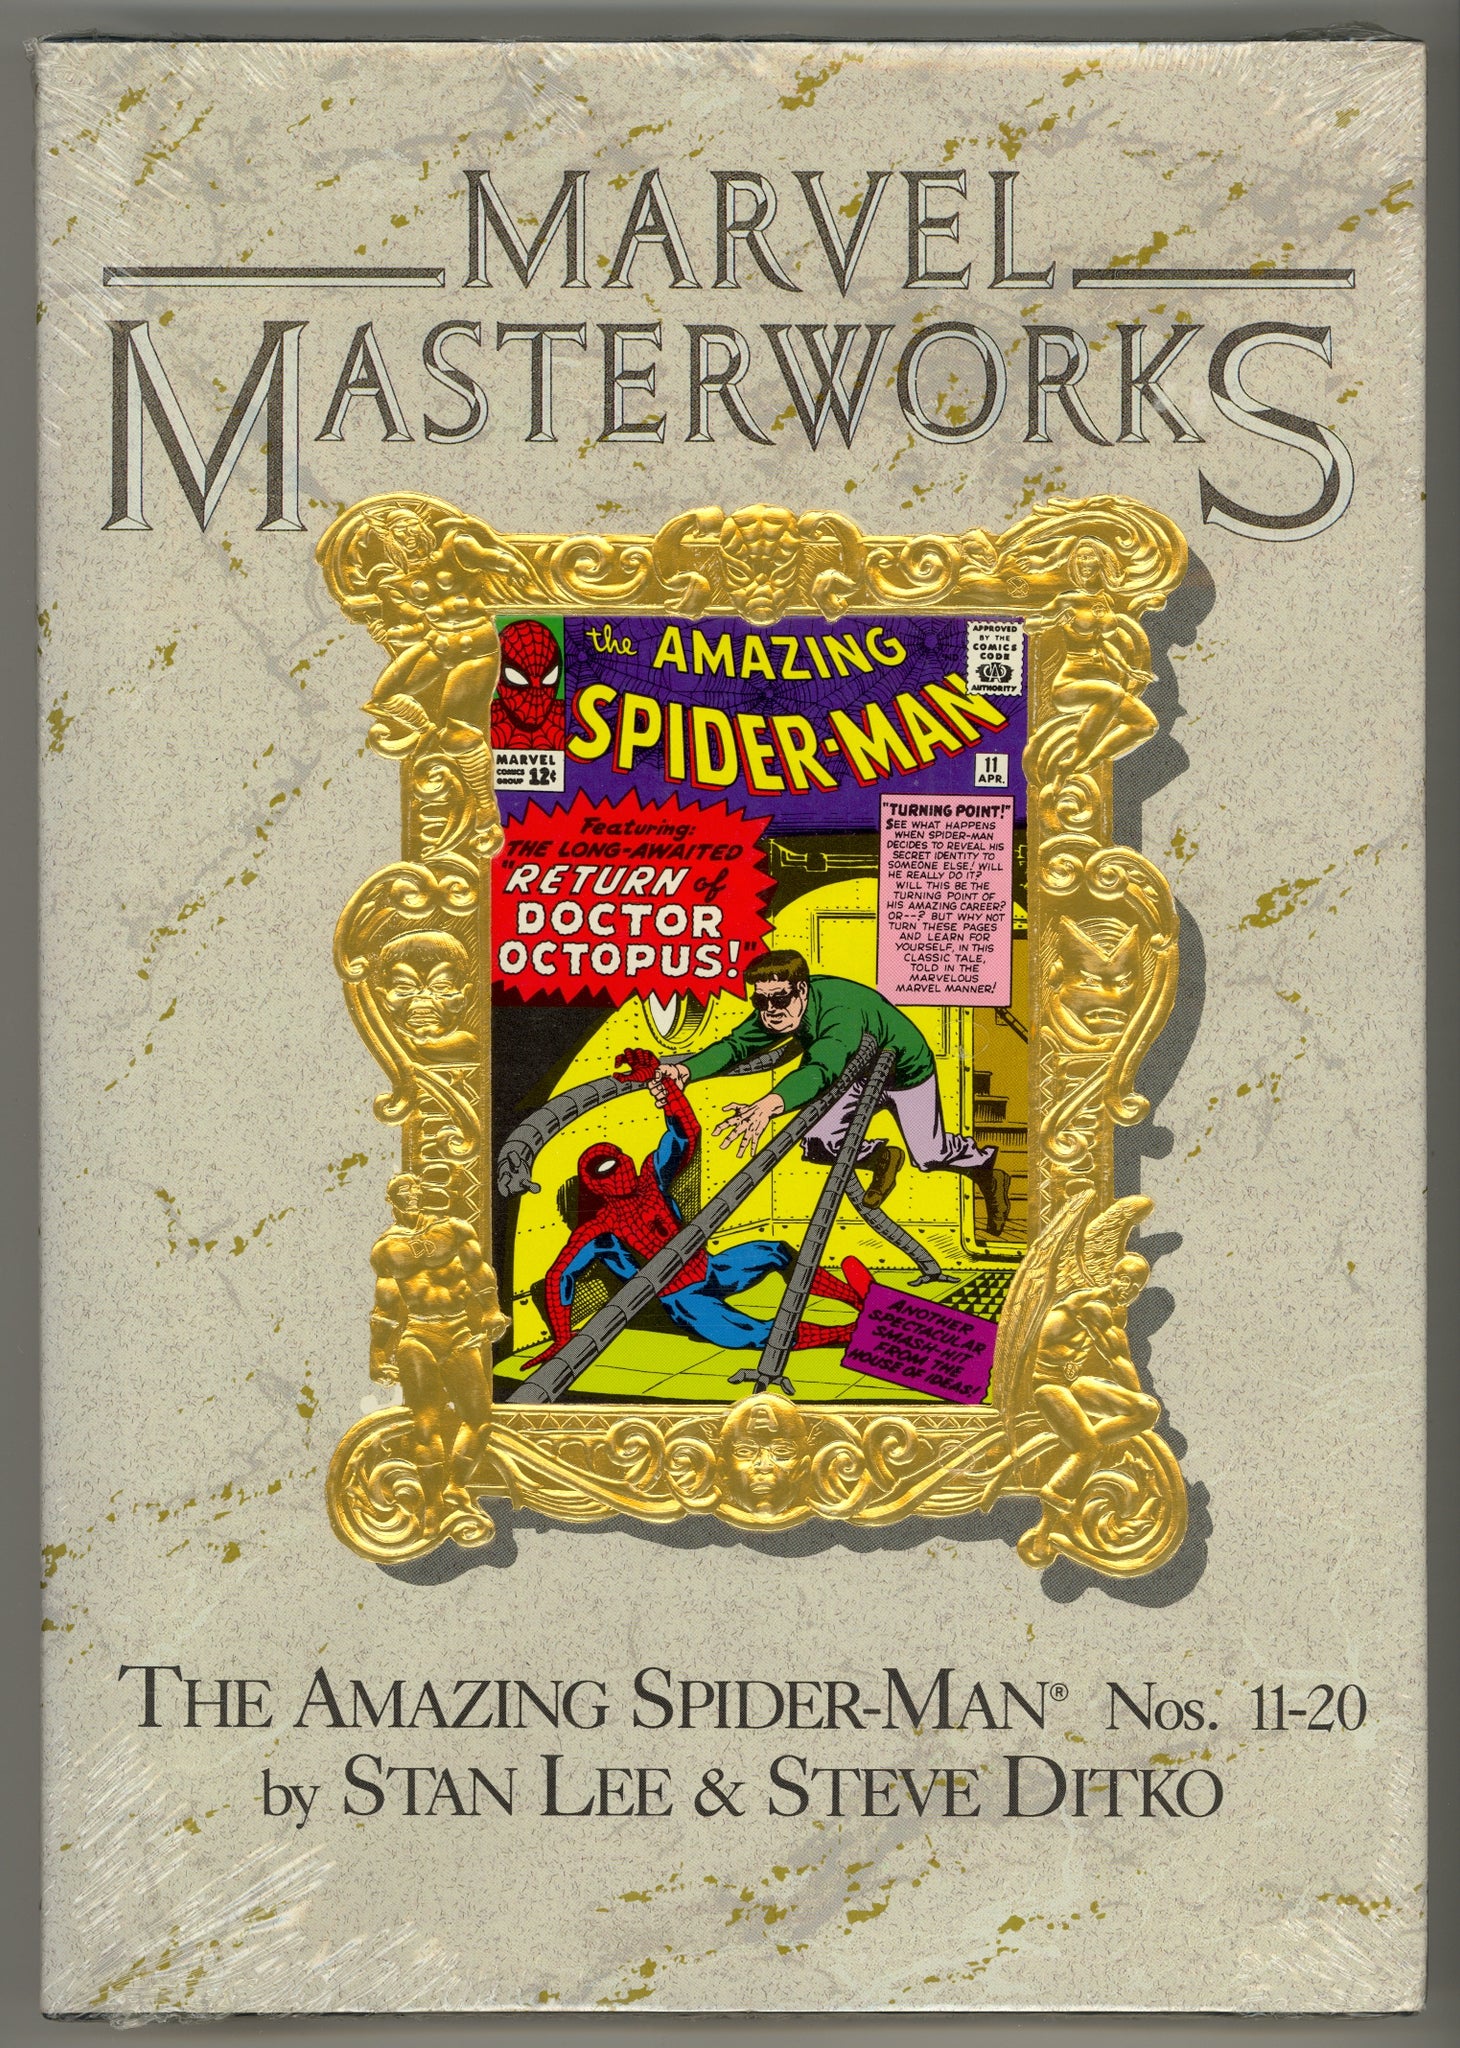 Marvel Masterworks Volume 5, Amazing Spider-Man issues 11-20 - 1st printing